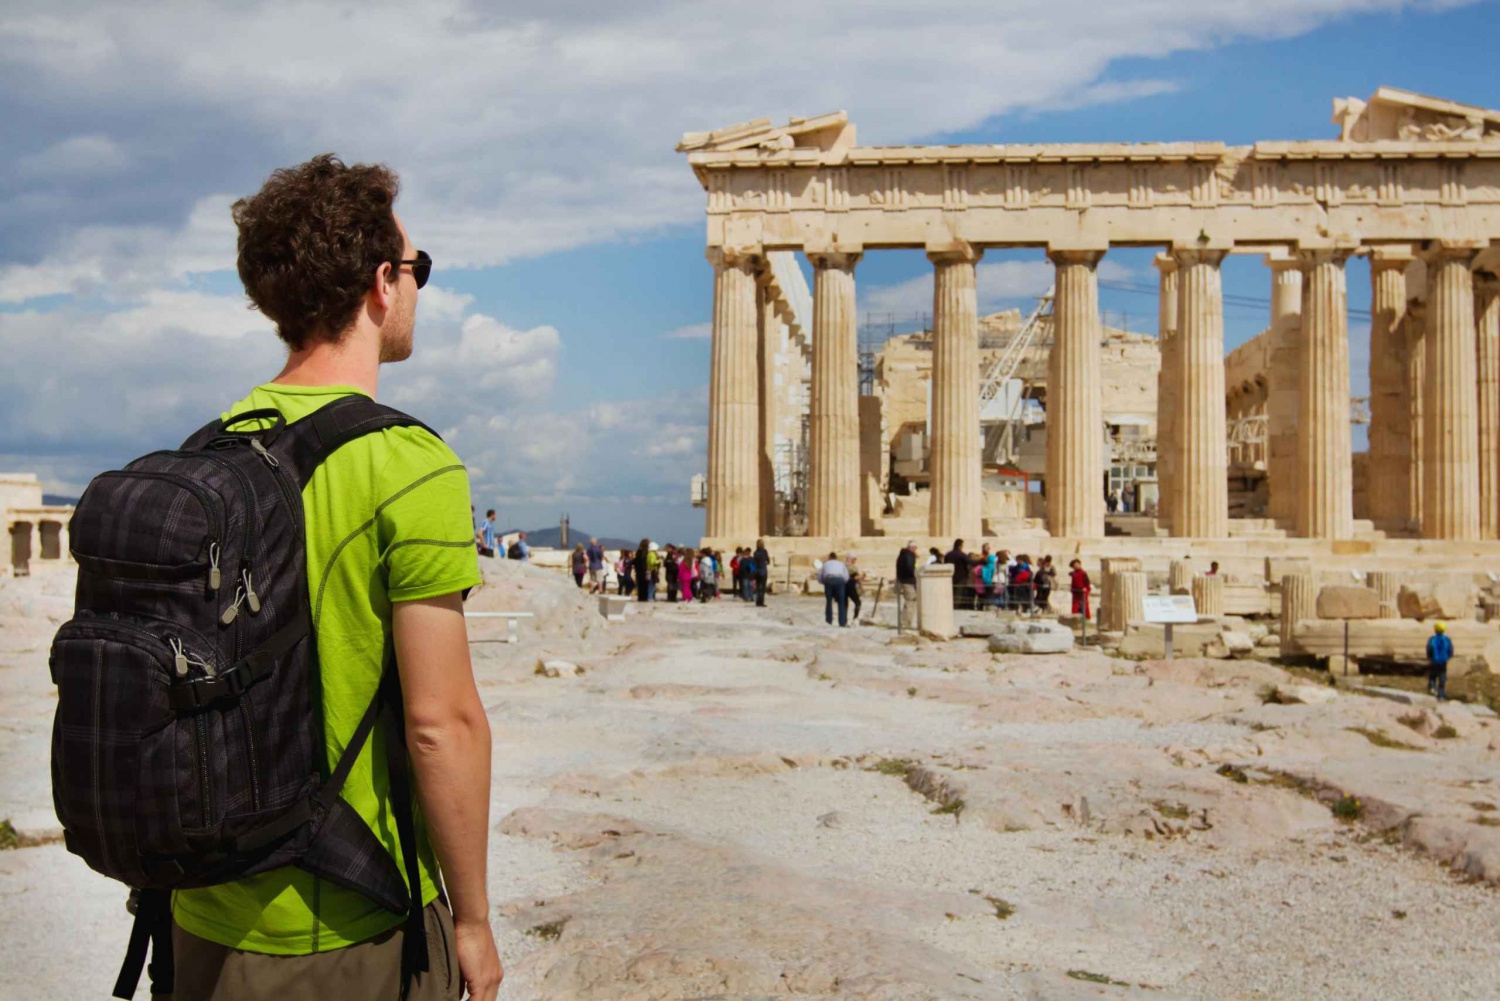 Athens Private Tours: Acropolis and Acropolis Museum